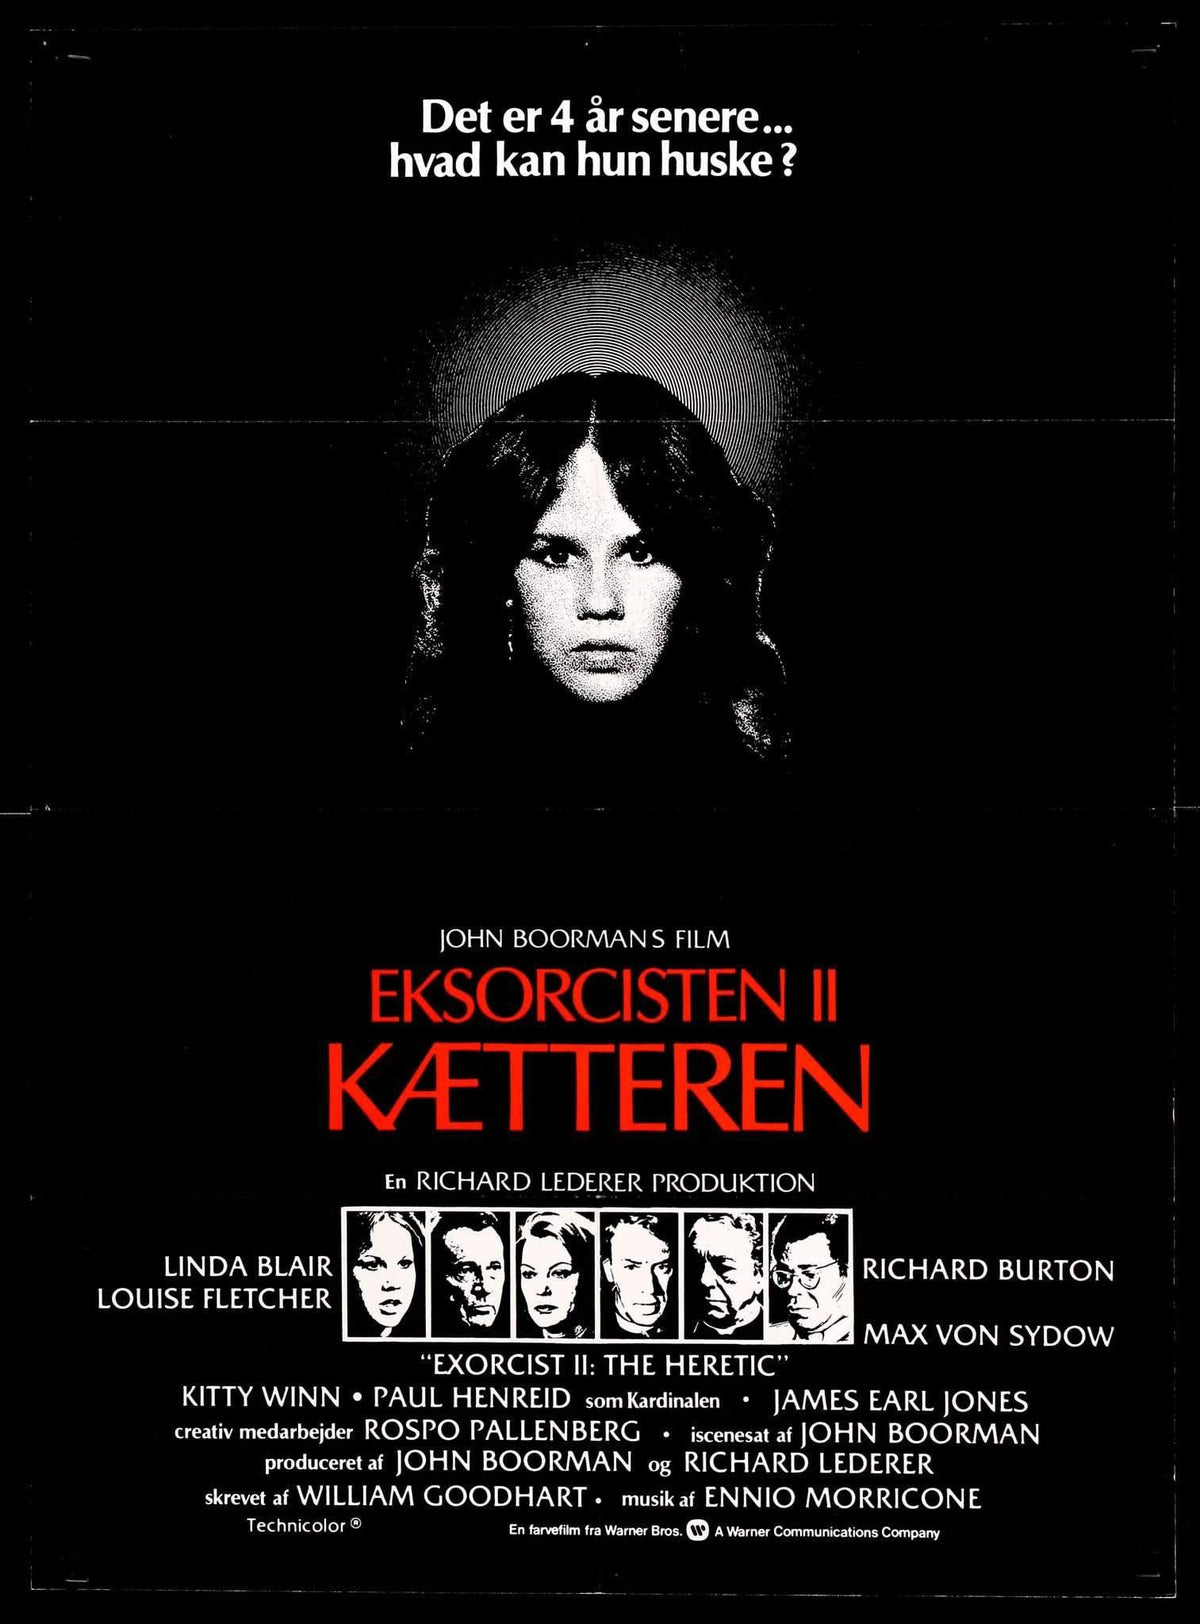 Exorcist II: The Heretic (1977) original movie poster for sale at Original Film Art